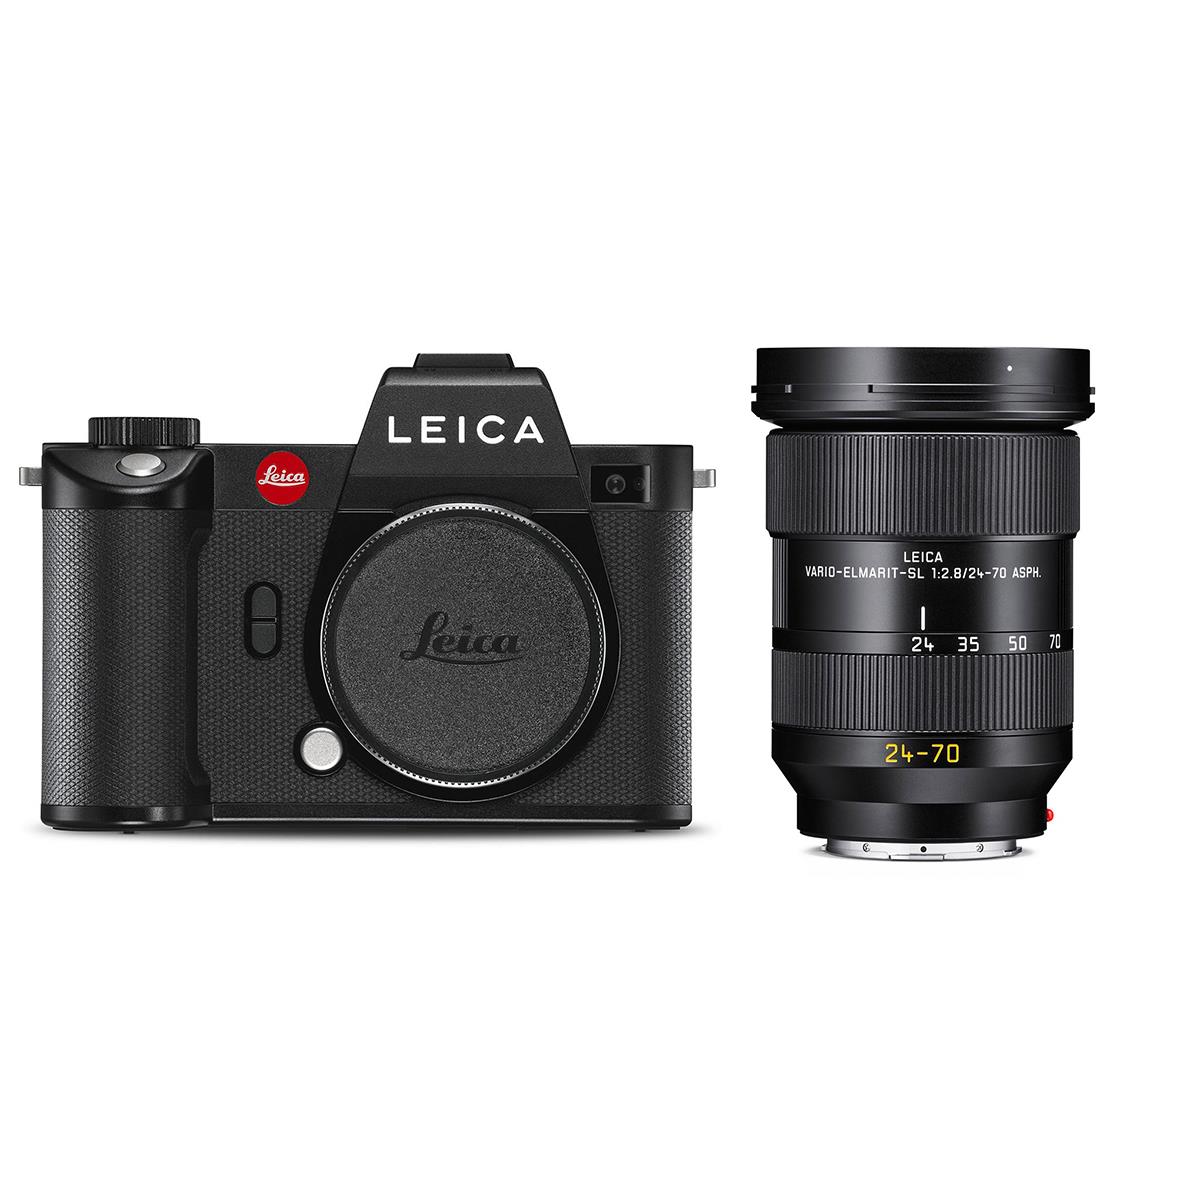 Leica SL2 Mirrorless Digital Camera (Black) with 24-70mm f/2.8 Lens